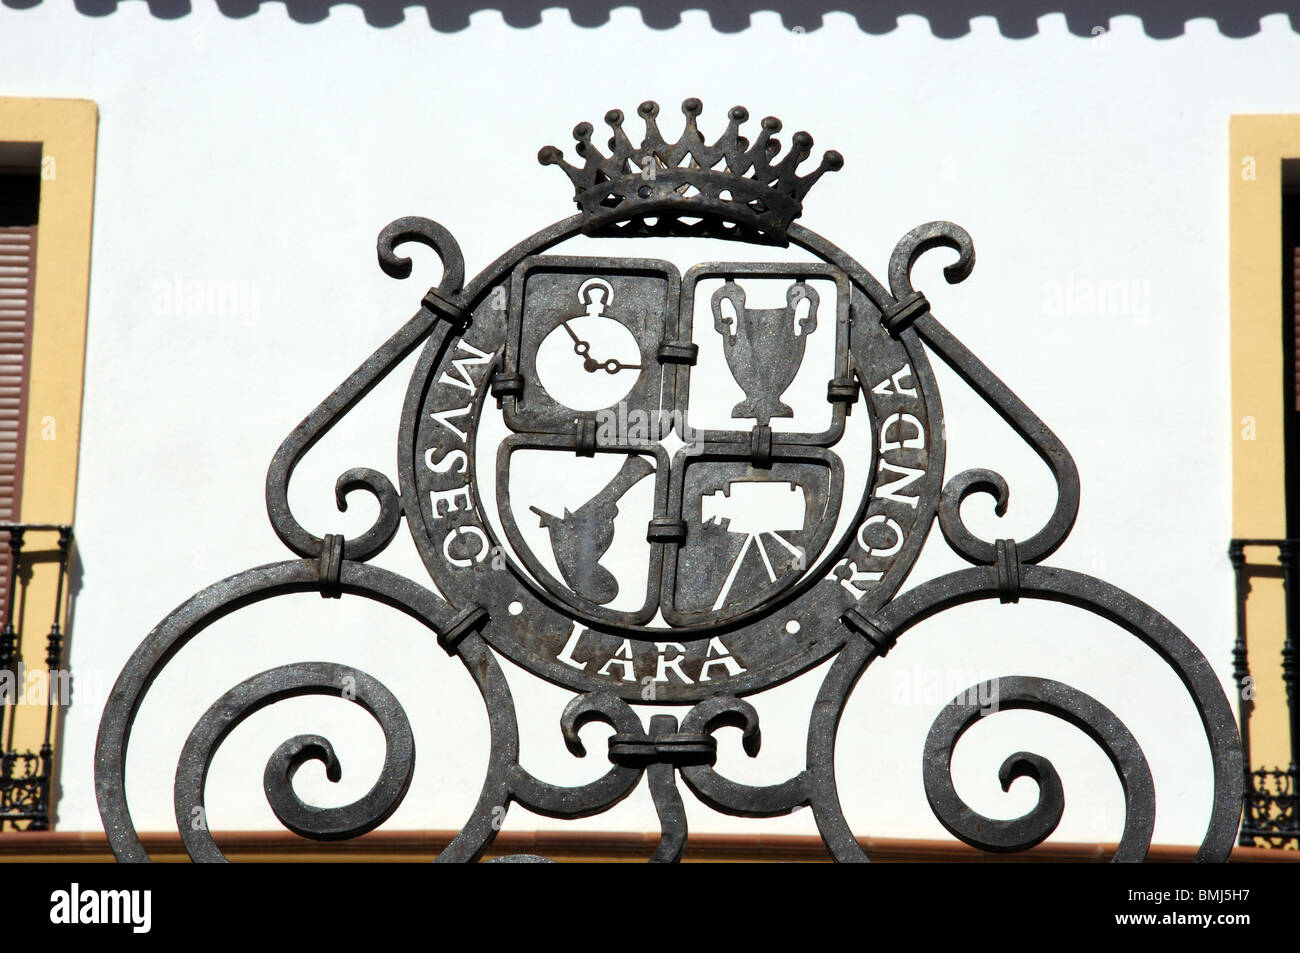 Wrought iron museum sign (Museo Lara Ronda), Ronda, Malaga Province, Andalucia, Spain, Western Europe. Stock Photo